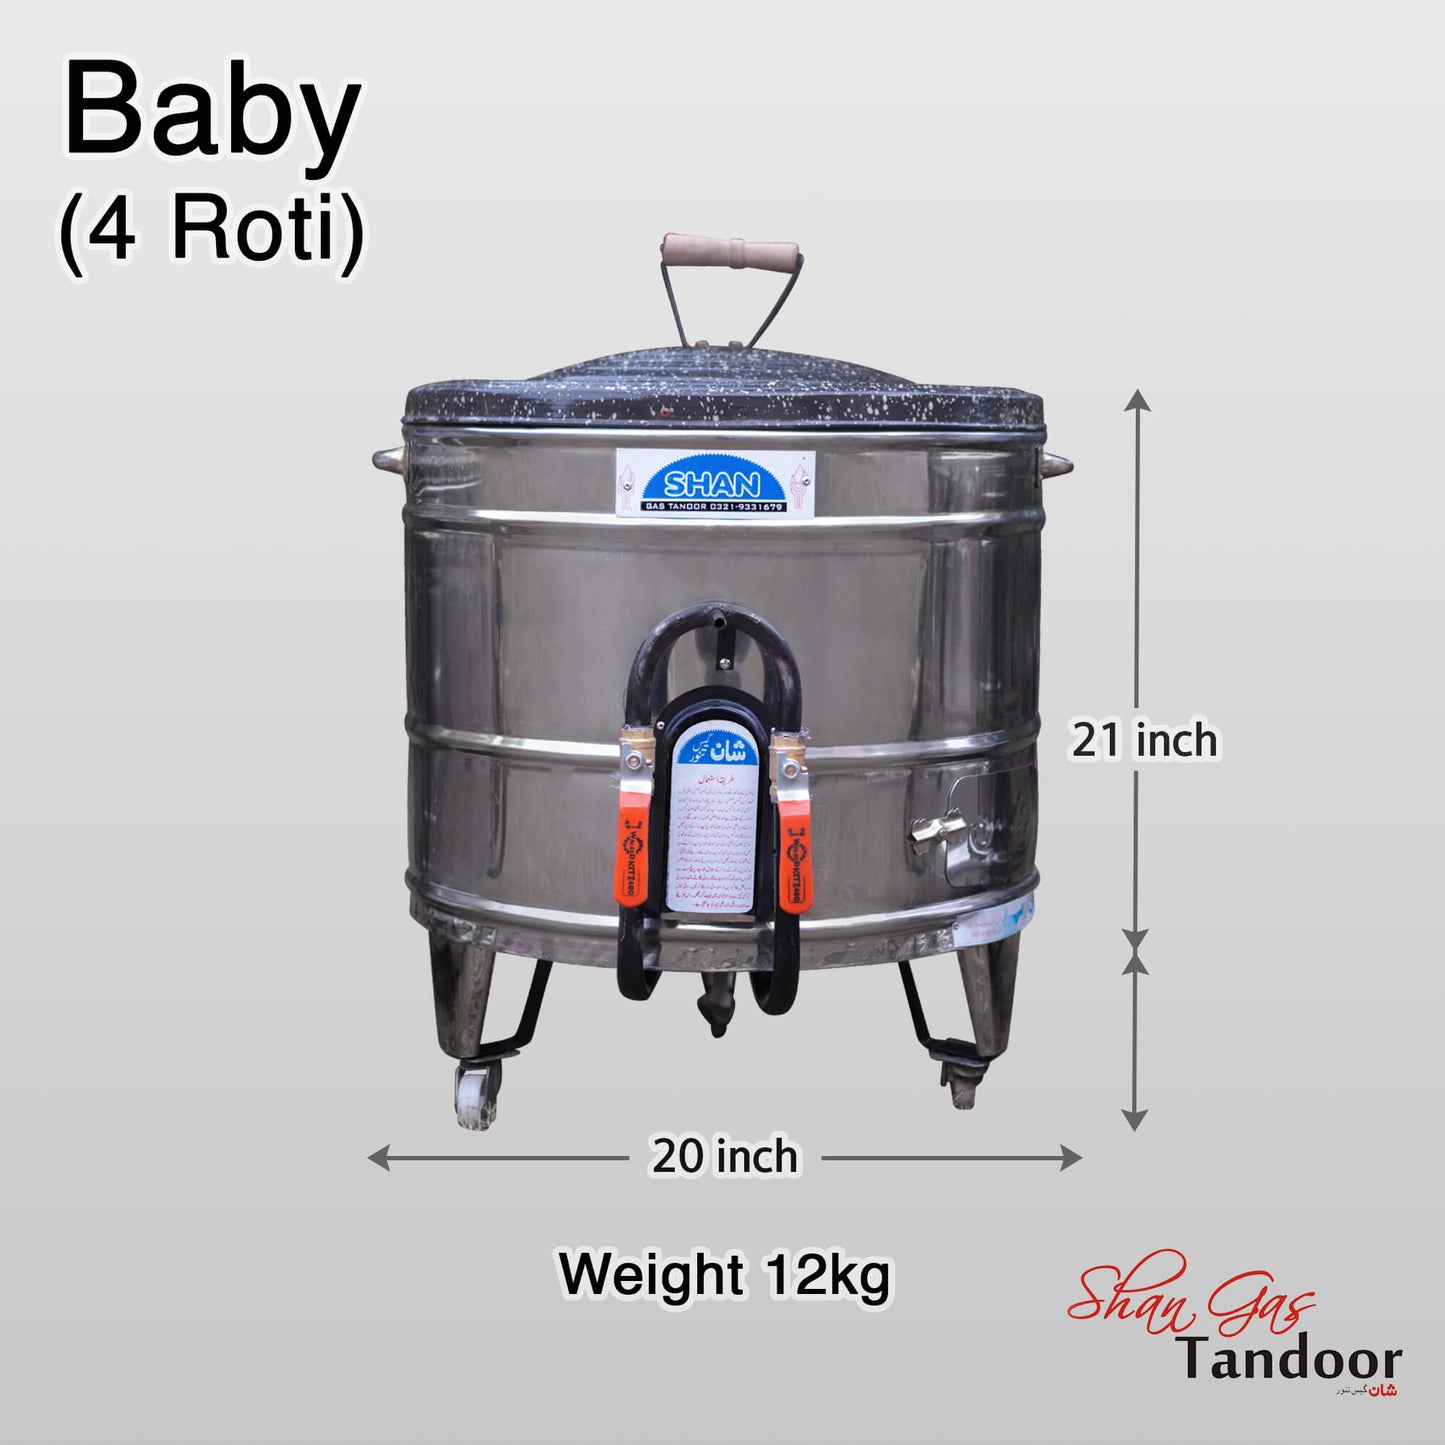 Baby Size 4 Roti Gas Tandoor